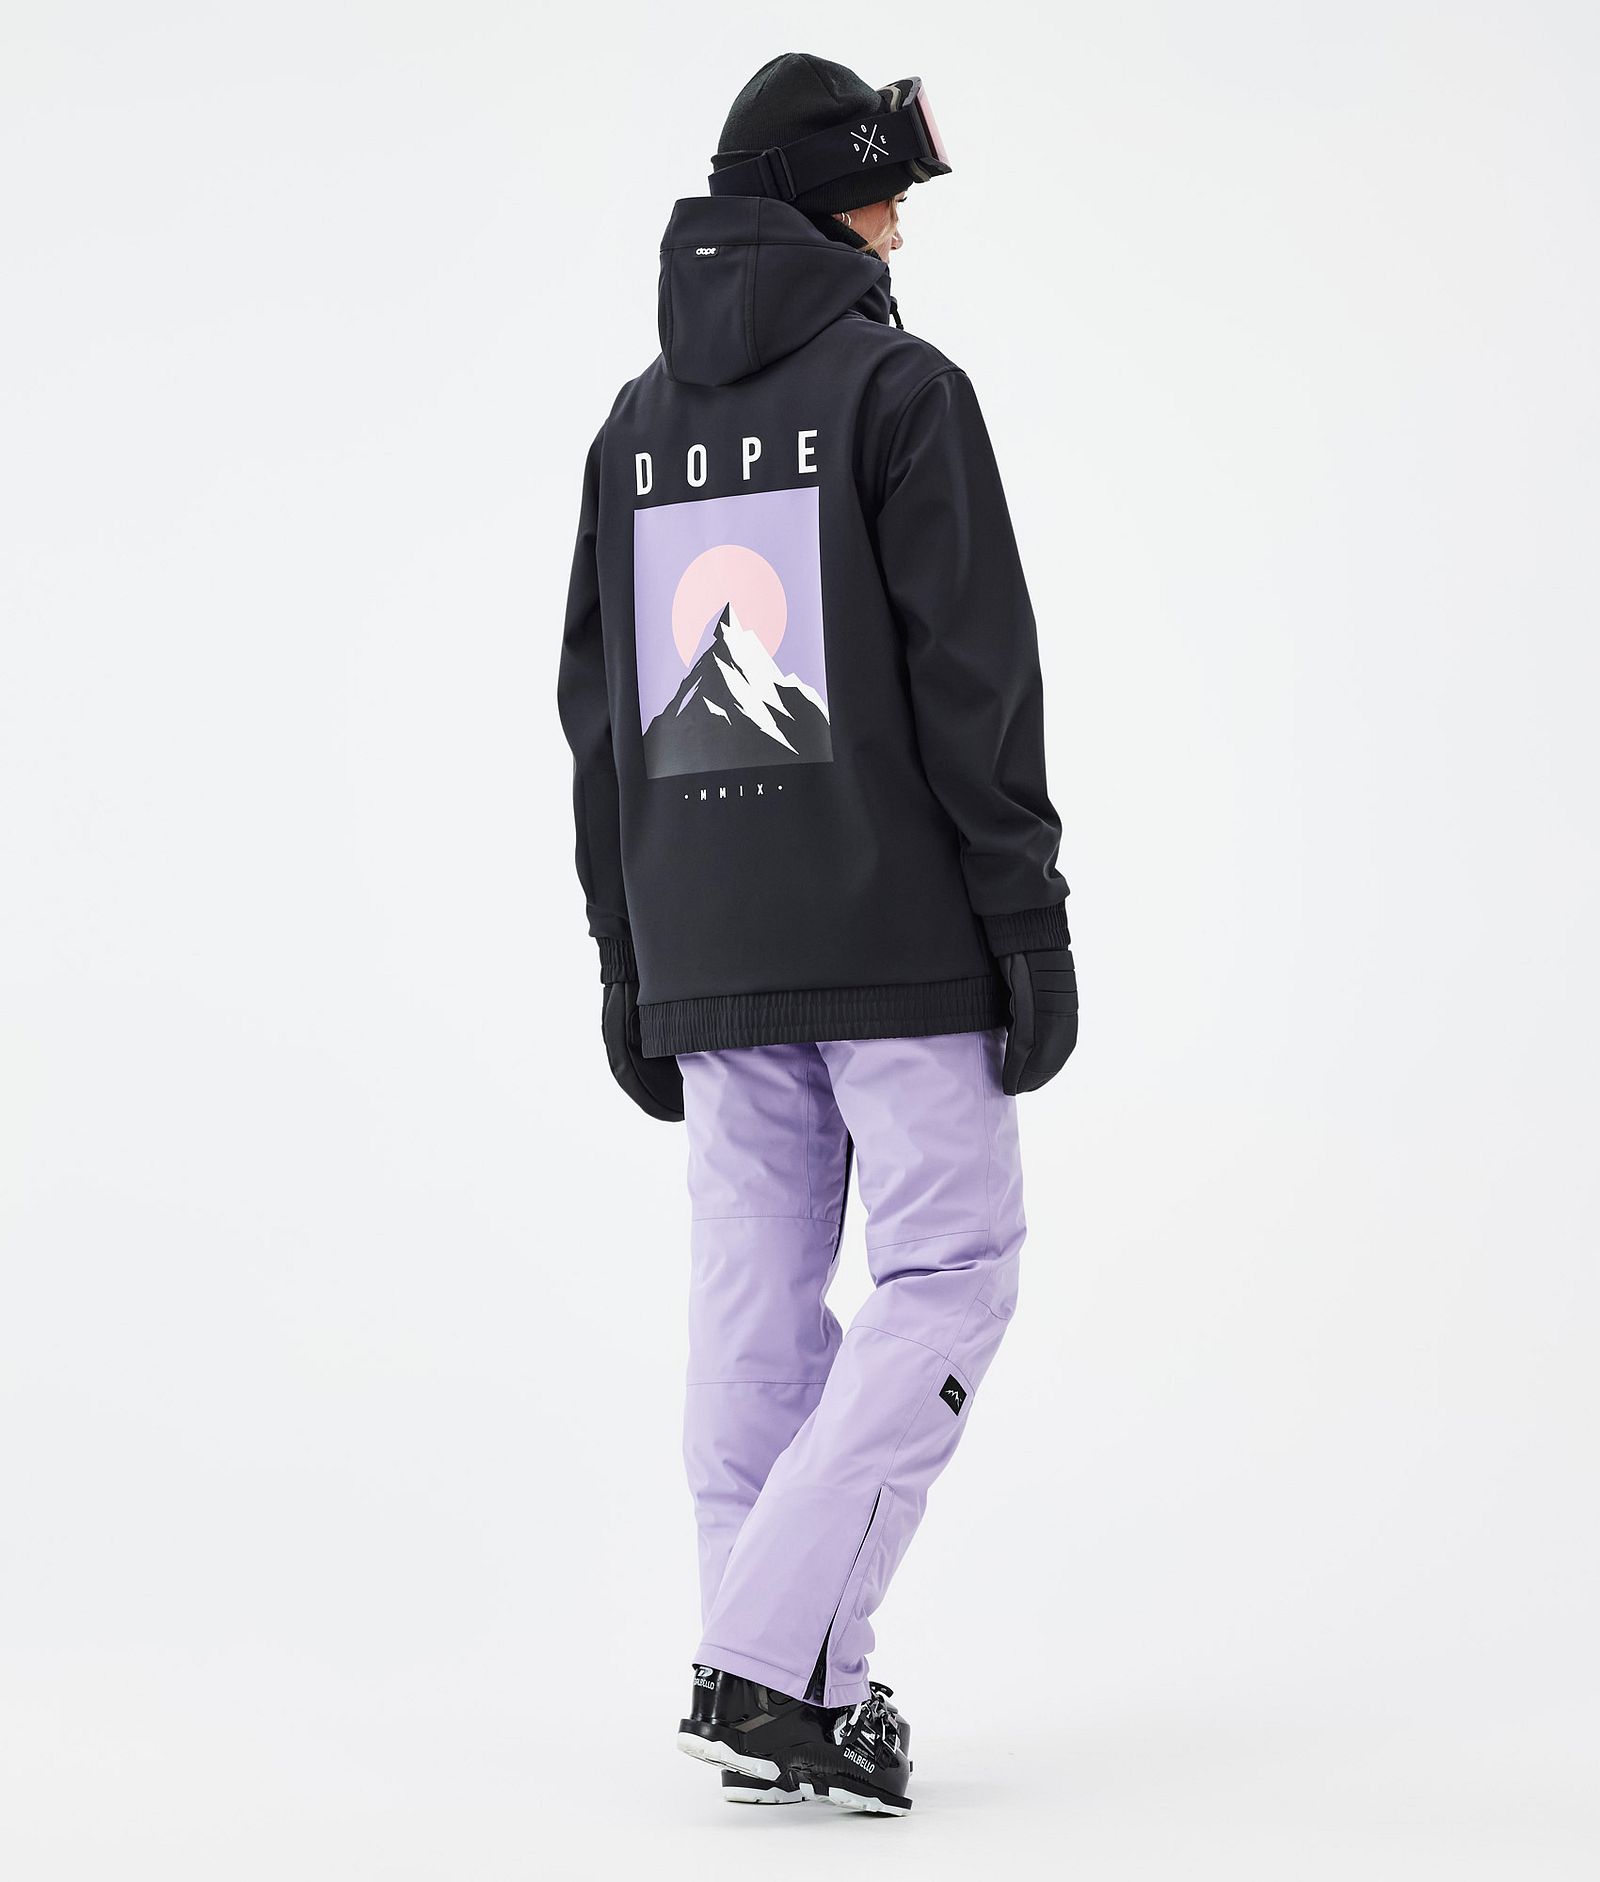 Yeti W Ski Outfit Dame Black/Faded Violet